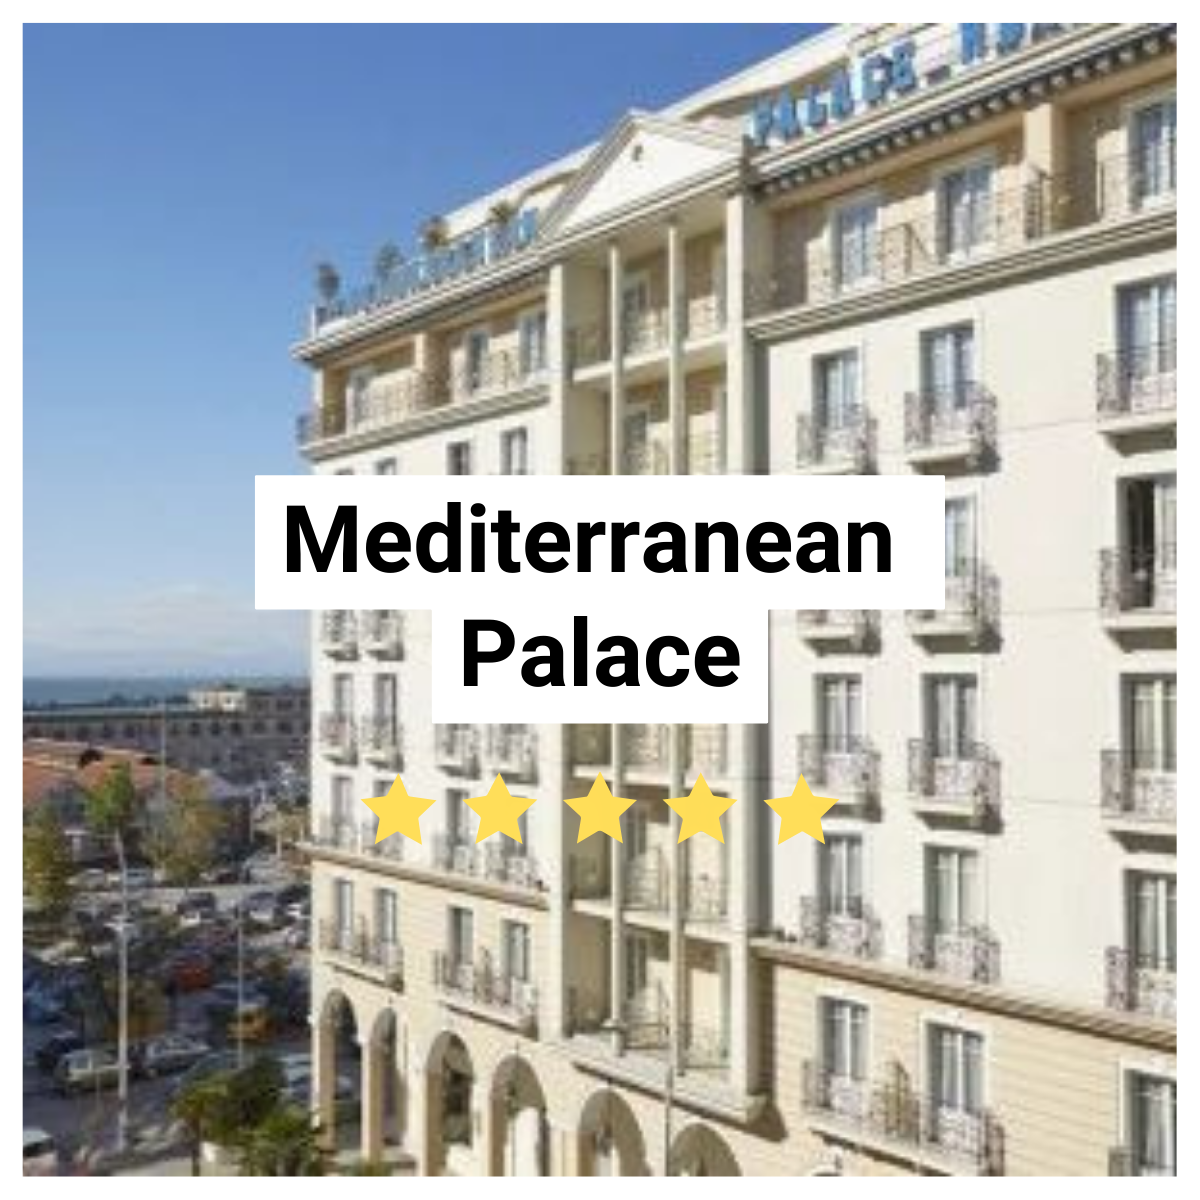 Mediterranean Palace Hotel Image.